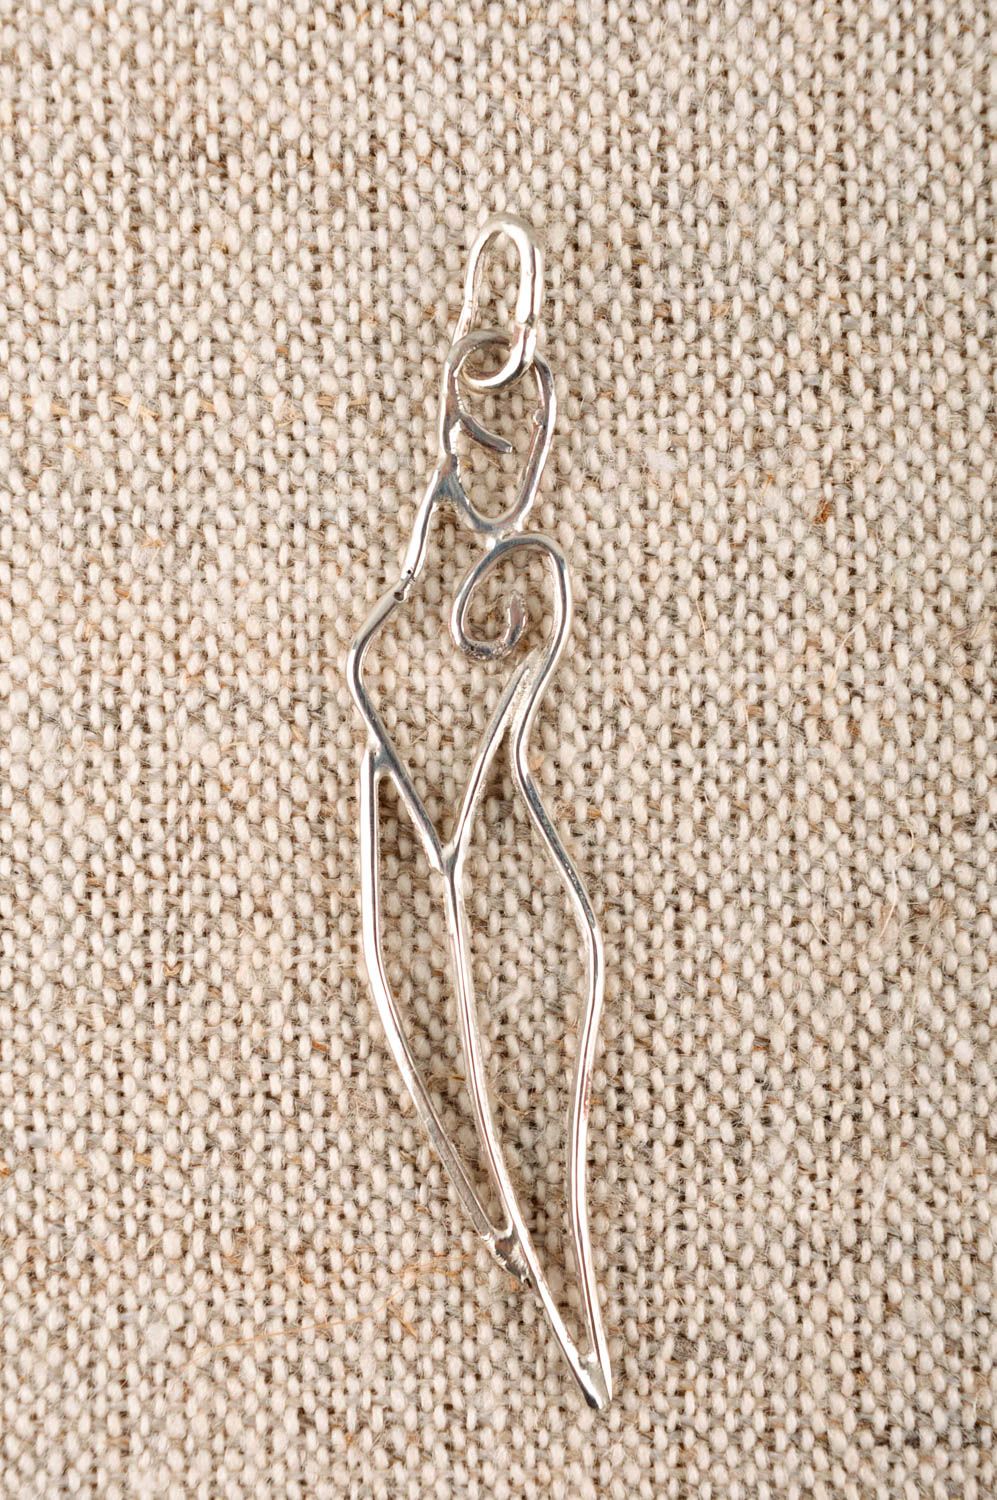 Handmade pendant metal pendant designer accessory unusual gift beautiful jewelry photo 1